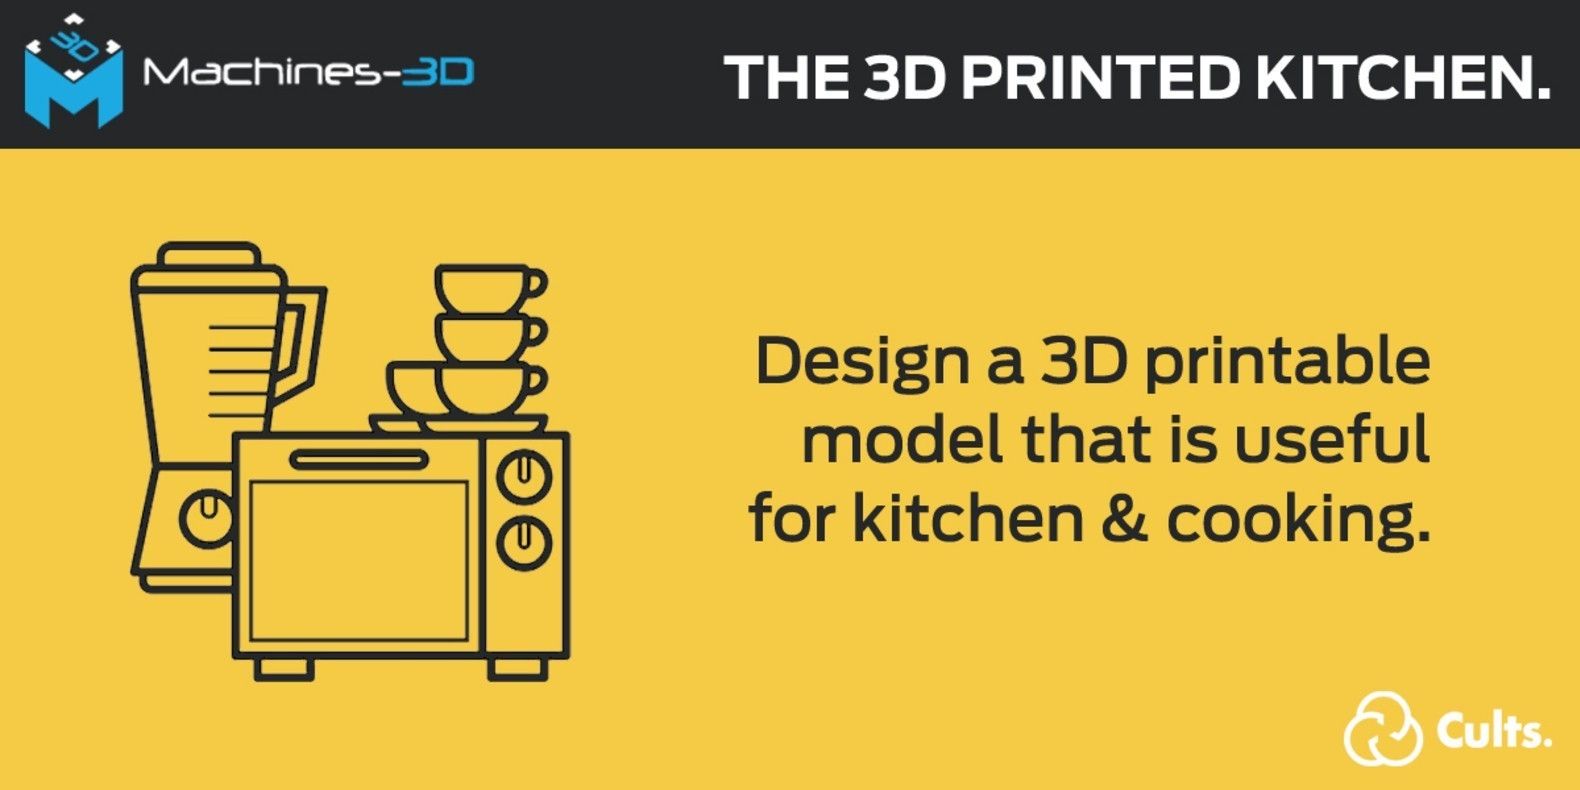 Contest 3D Printing Kitchen Machines-3D